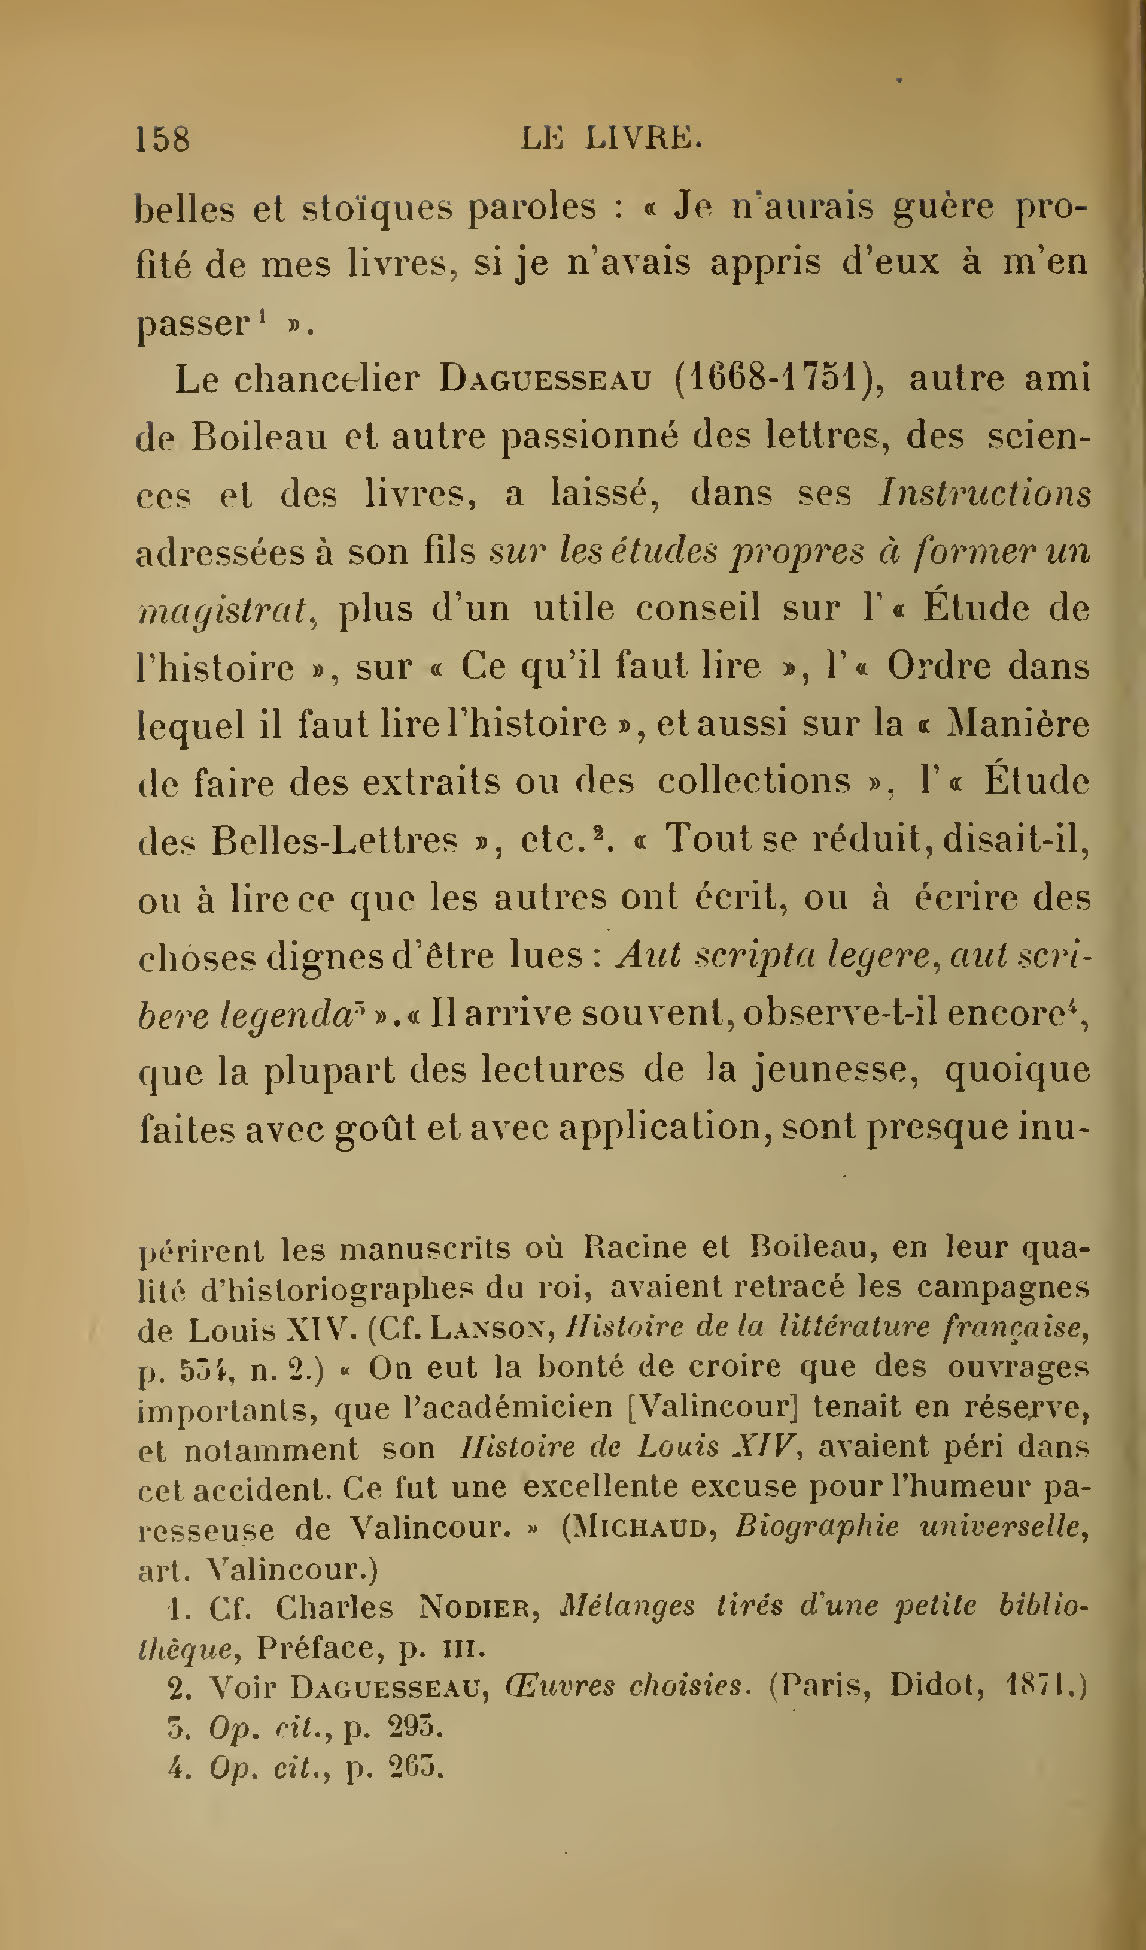 Albert Cim, Le Livre, t. I, p. 158.